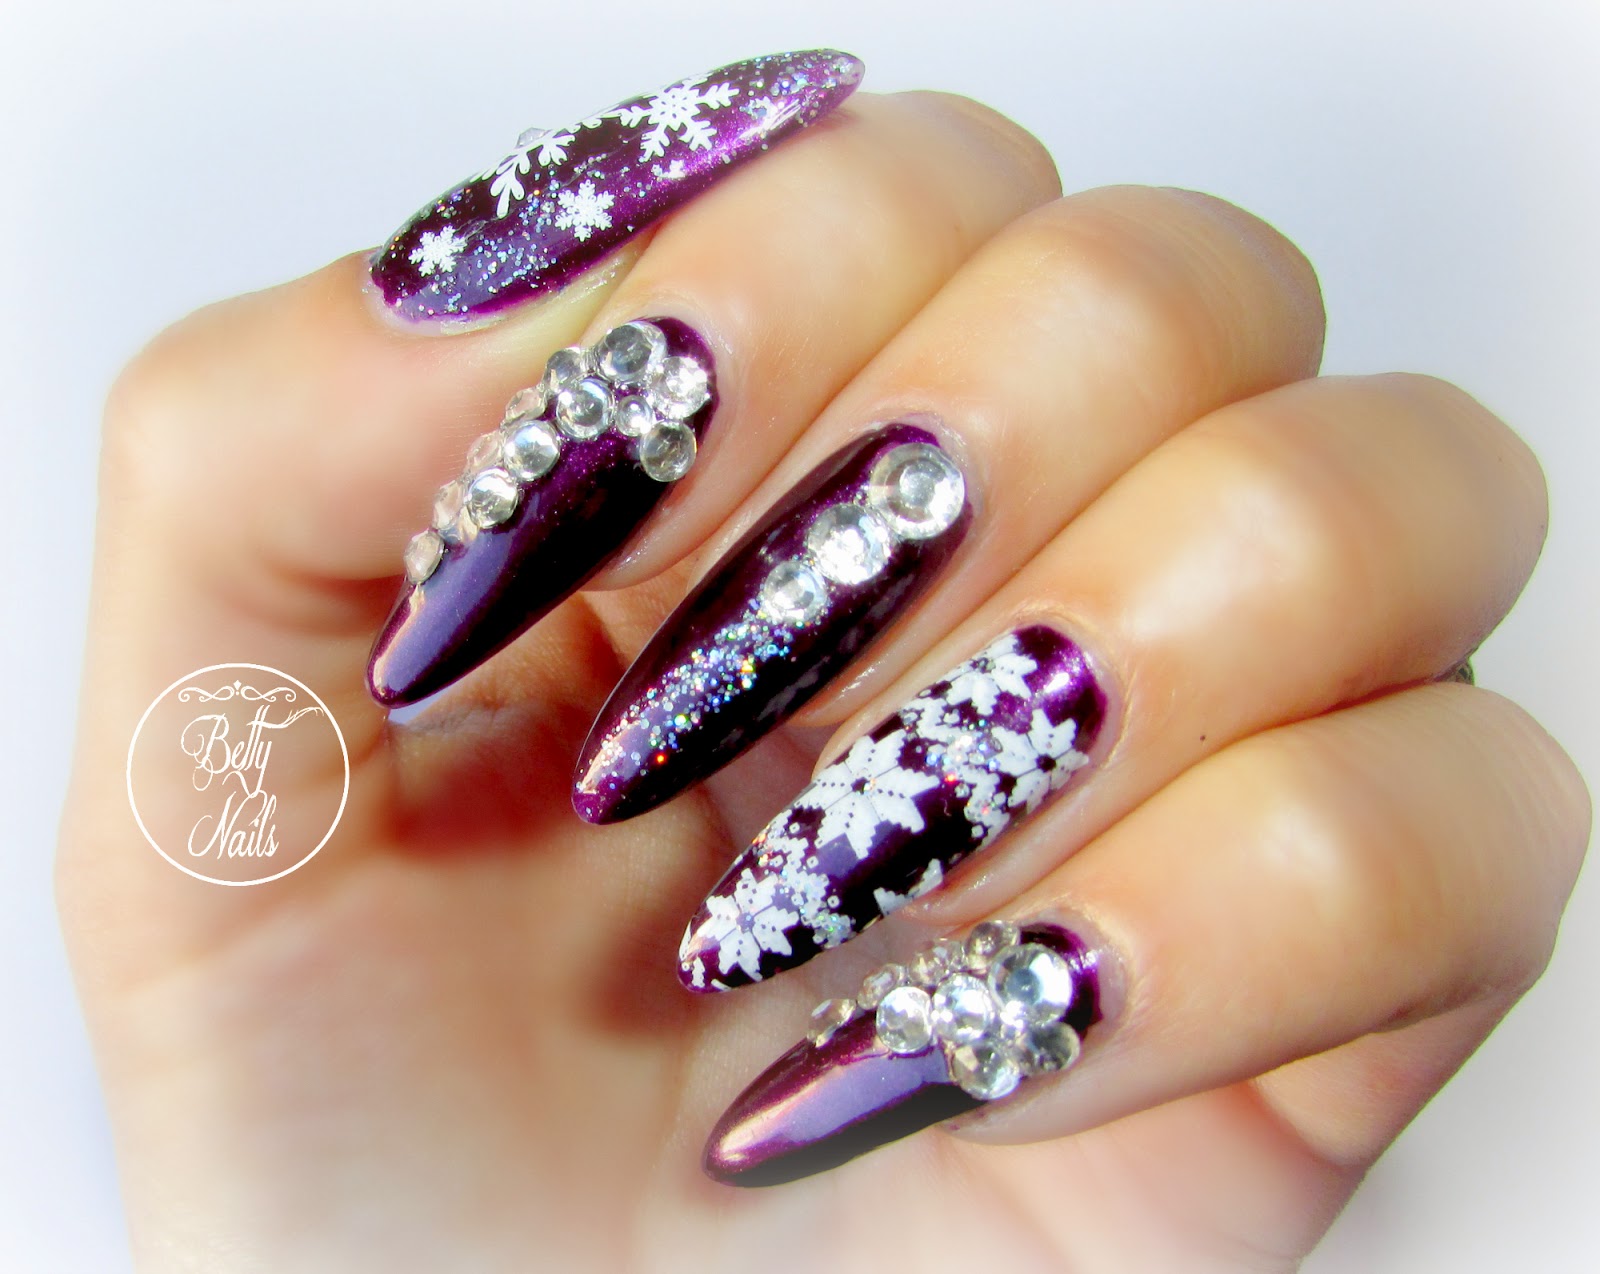 Betty Nails: Christmas Nails - Snowflakes & Purple Sky